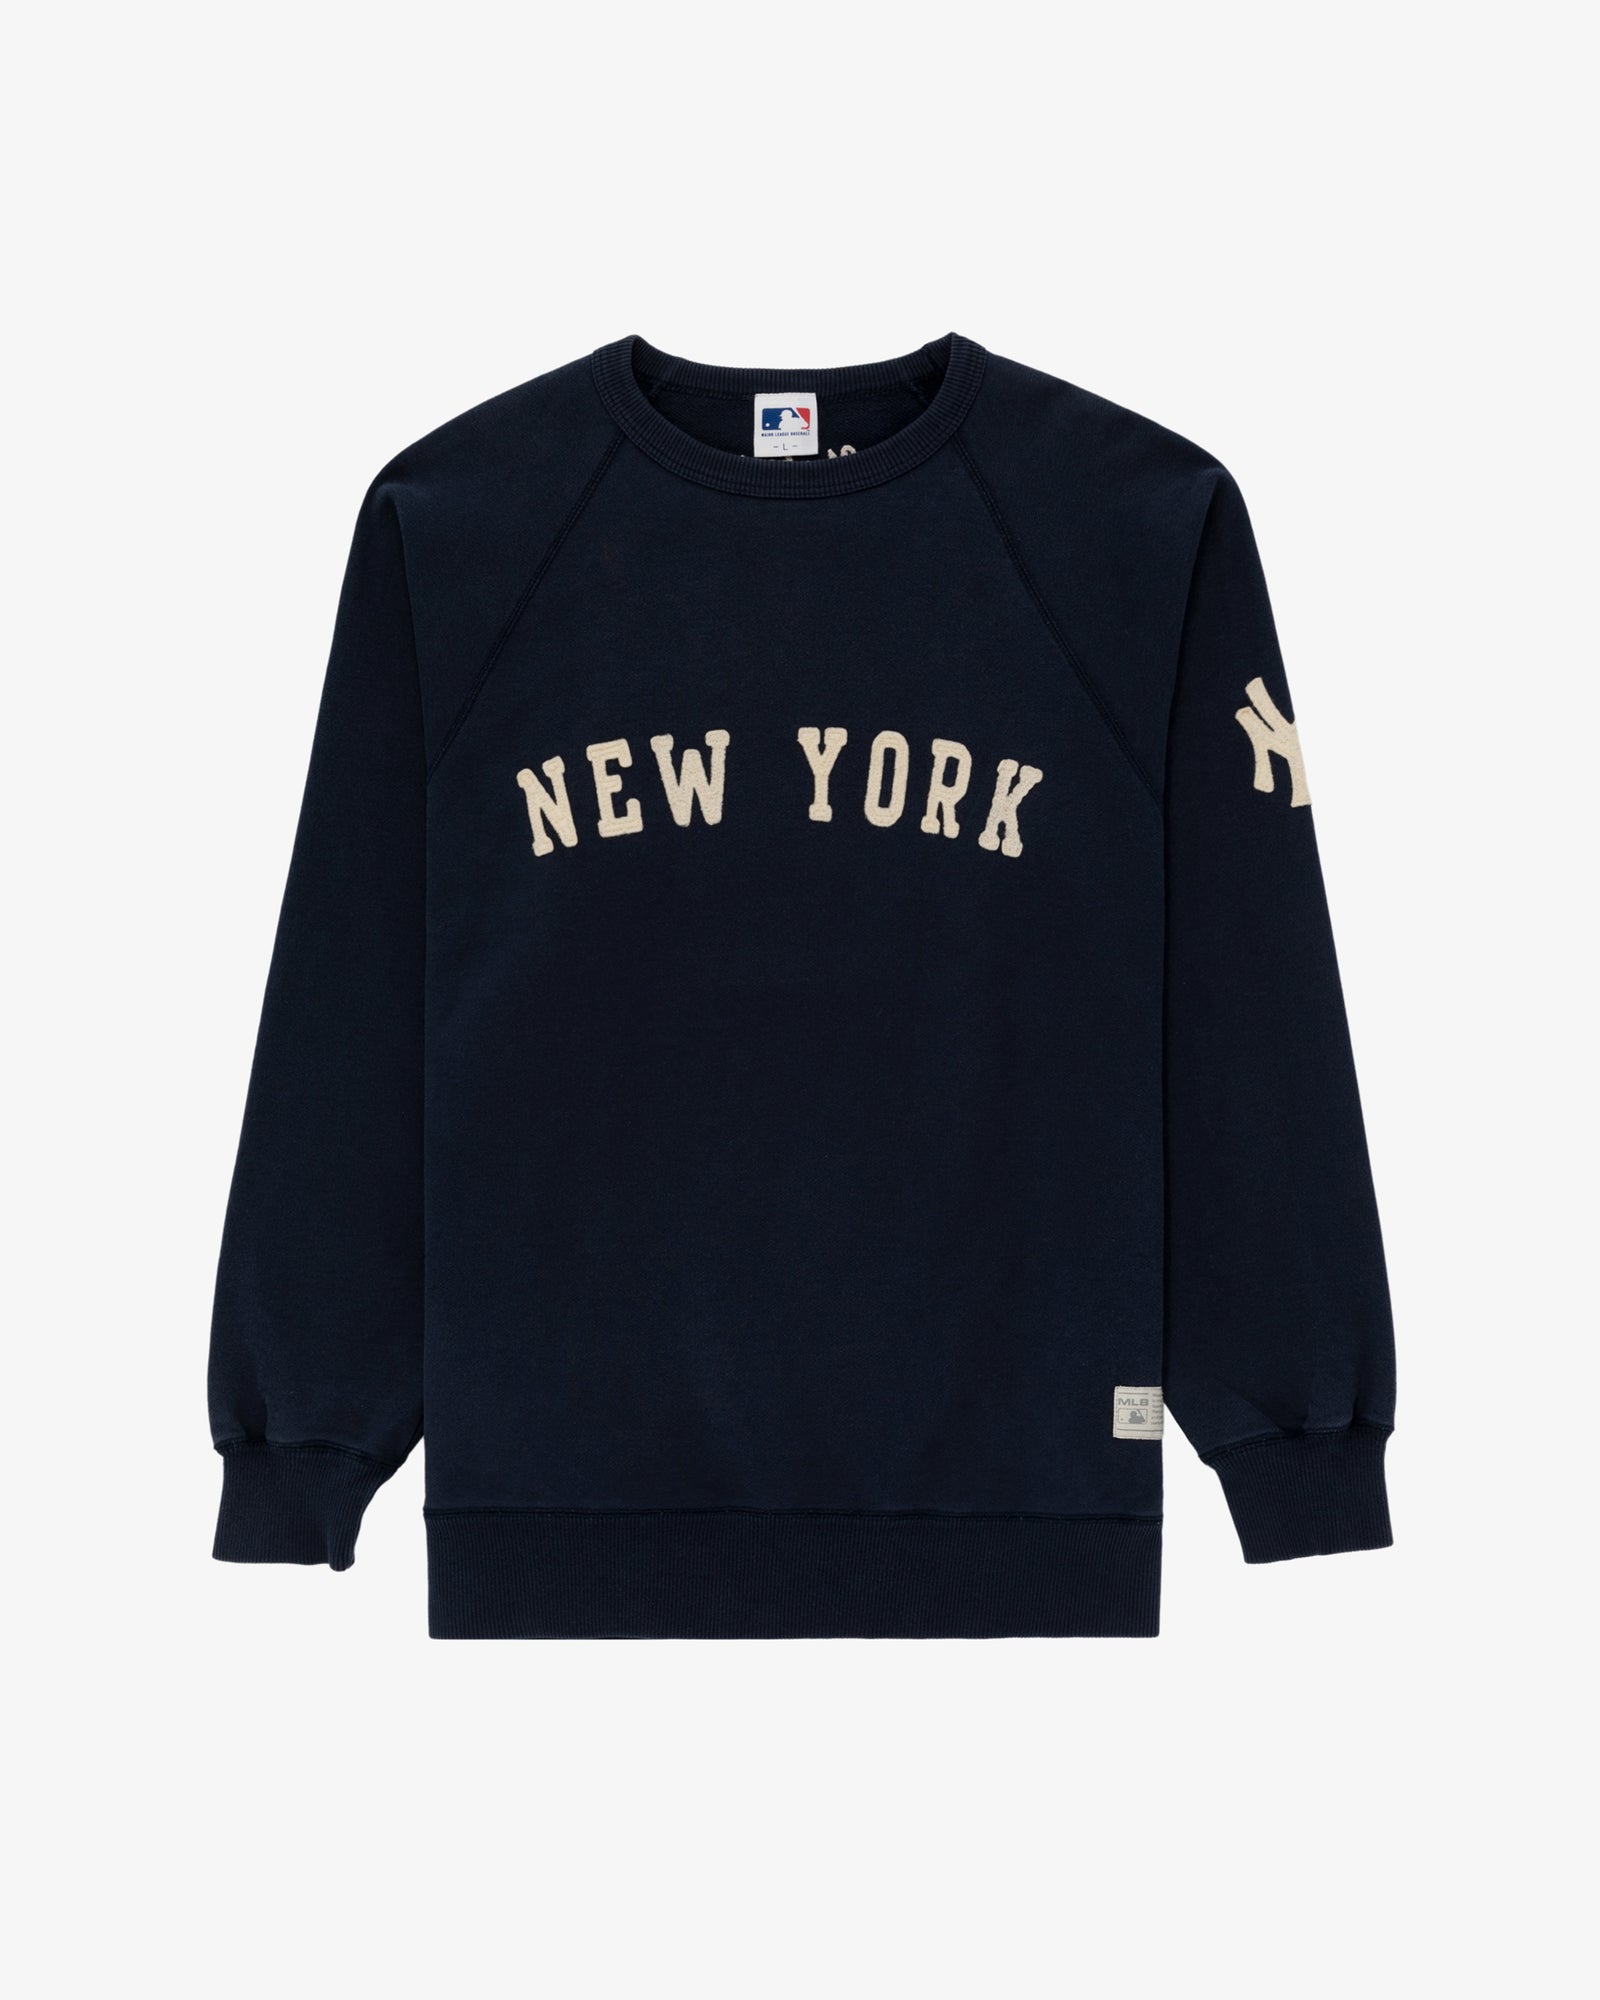 NY Yankees XXL Vintage Sweatshirt 